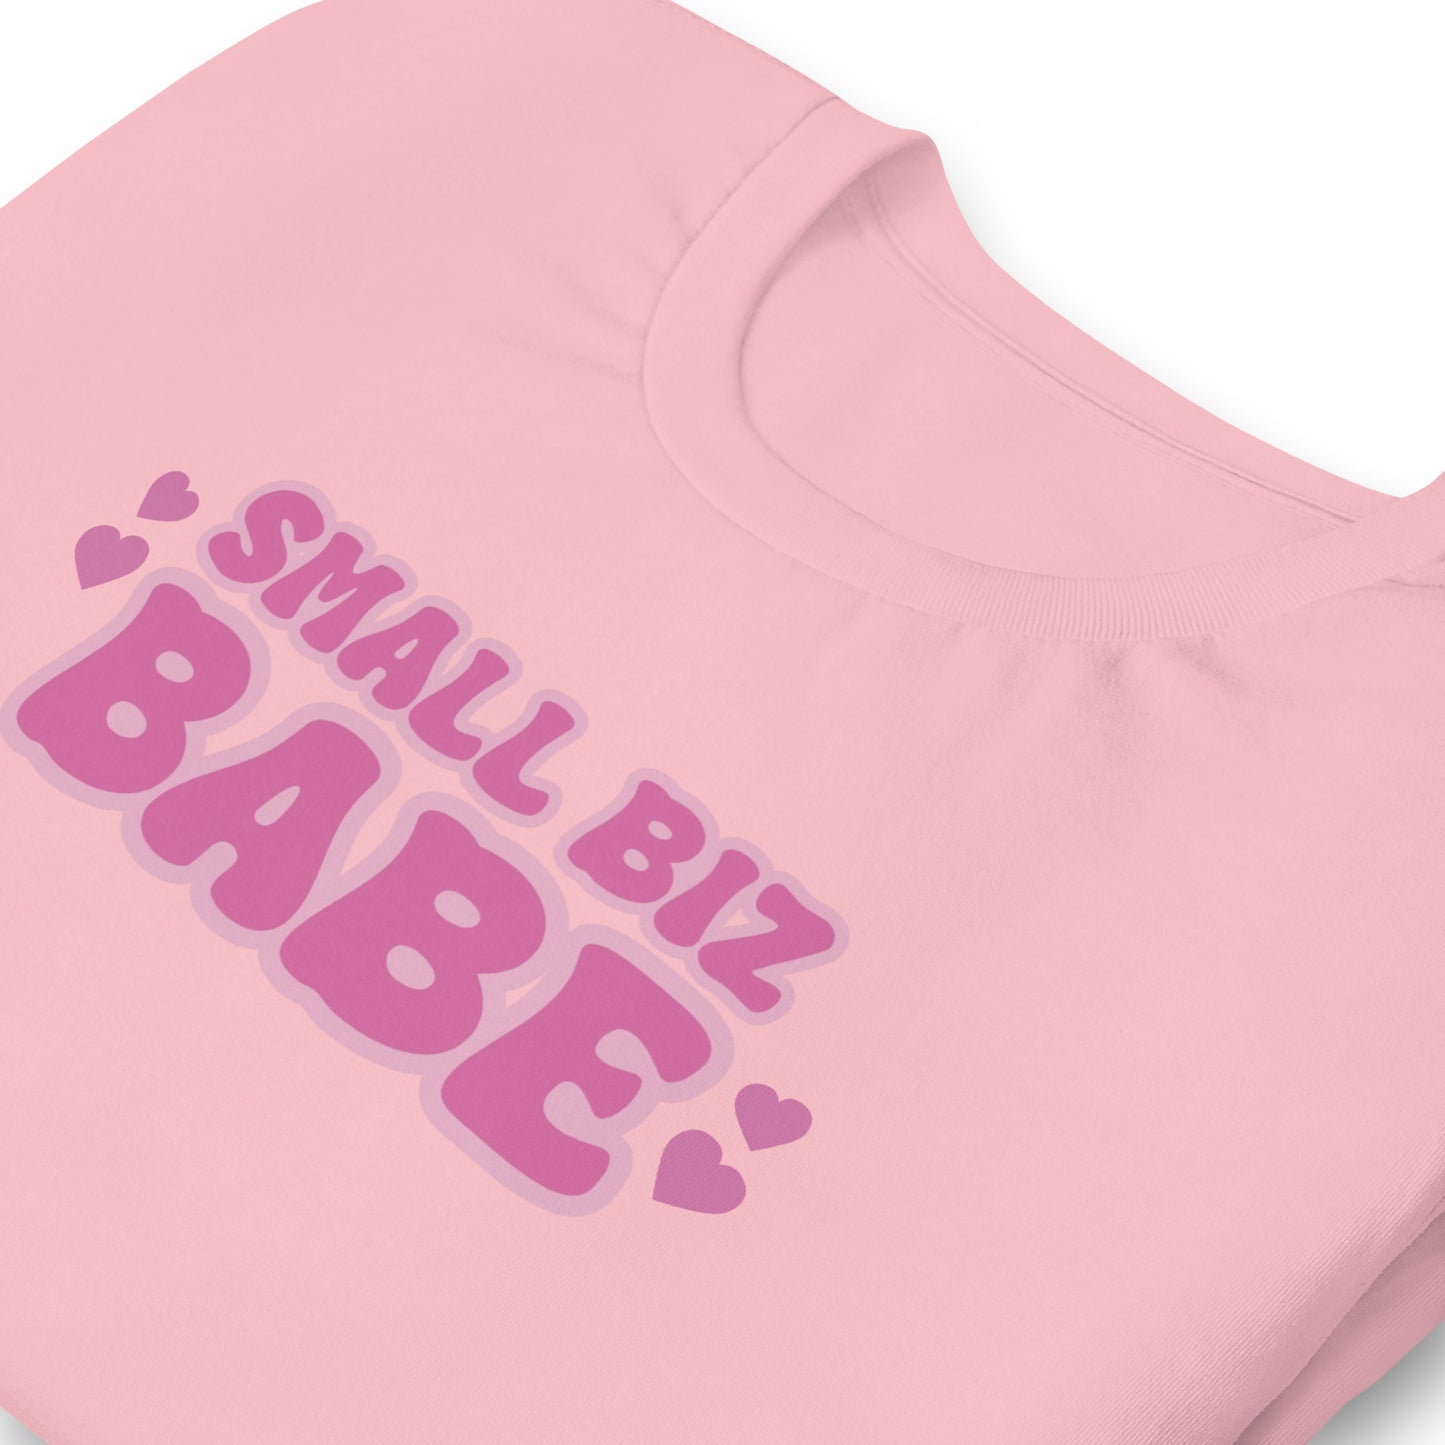 Small Biz Babe | T-Shirt | Regular Fit